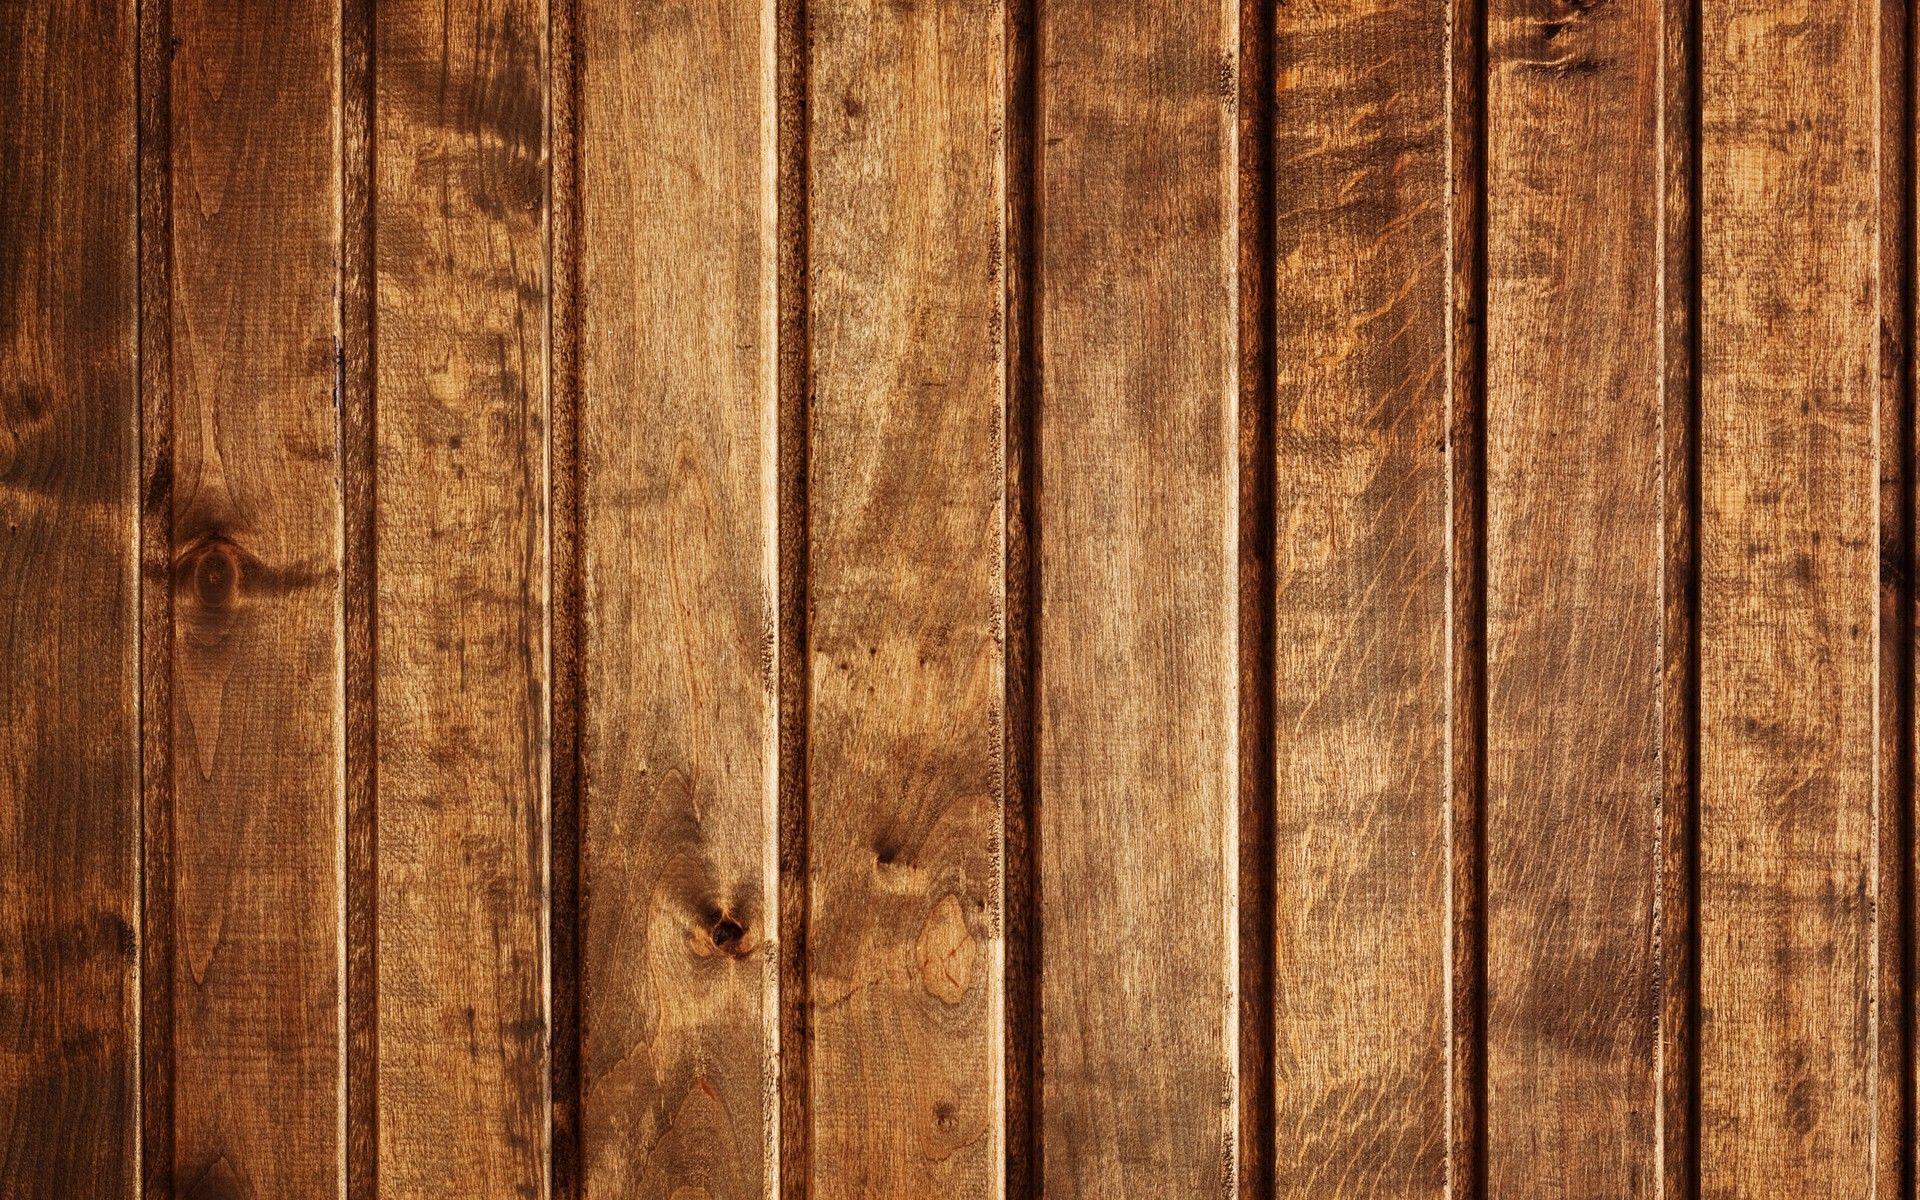 Wood Texture backgroundDownload free full HD wallpaper